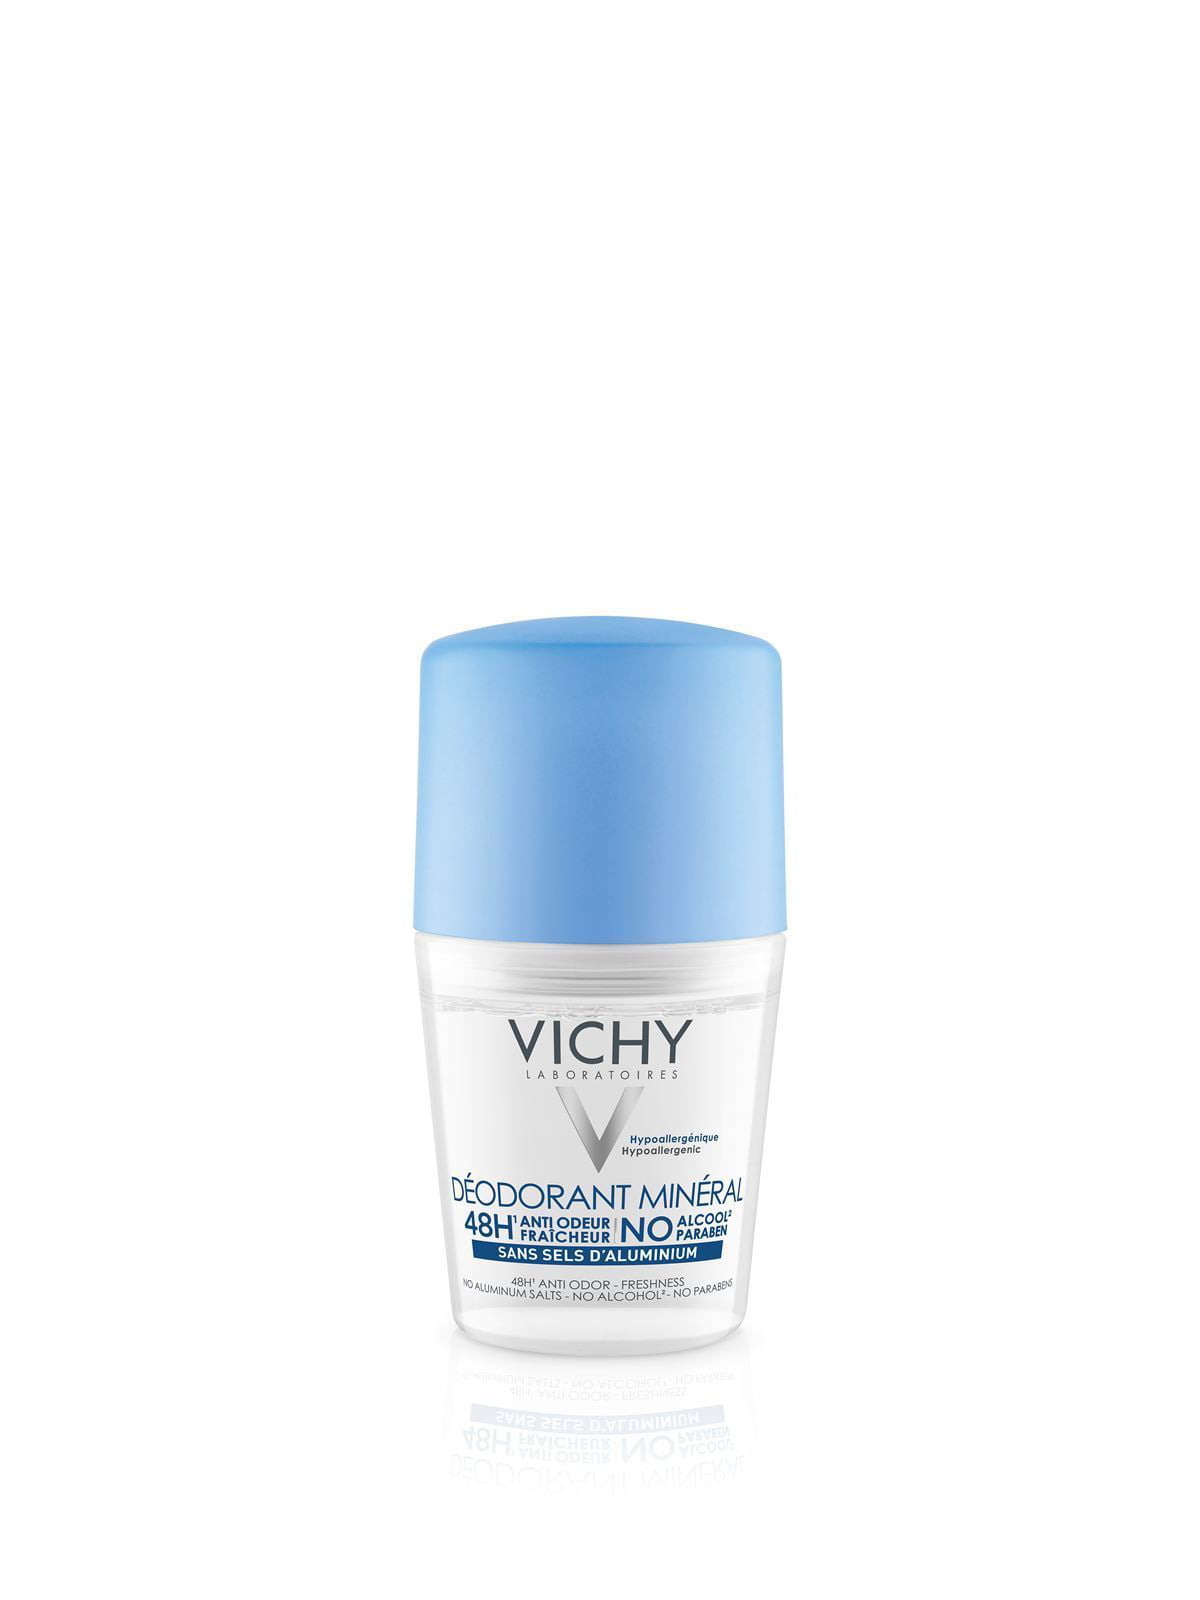 munching Overskæg dække over Vichy Deodorant Mineral Roll-on 48 Hour, 1.69 Oz - Walmart.com